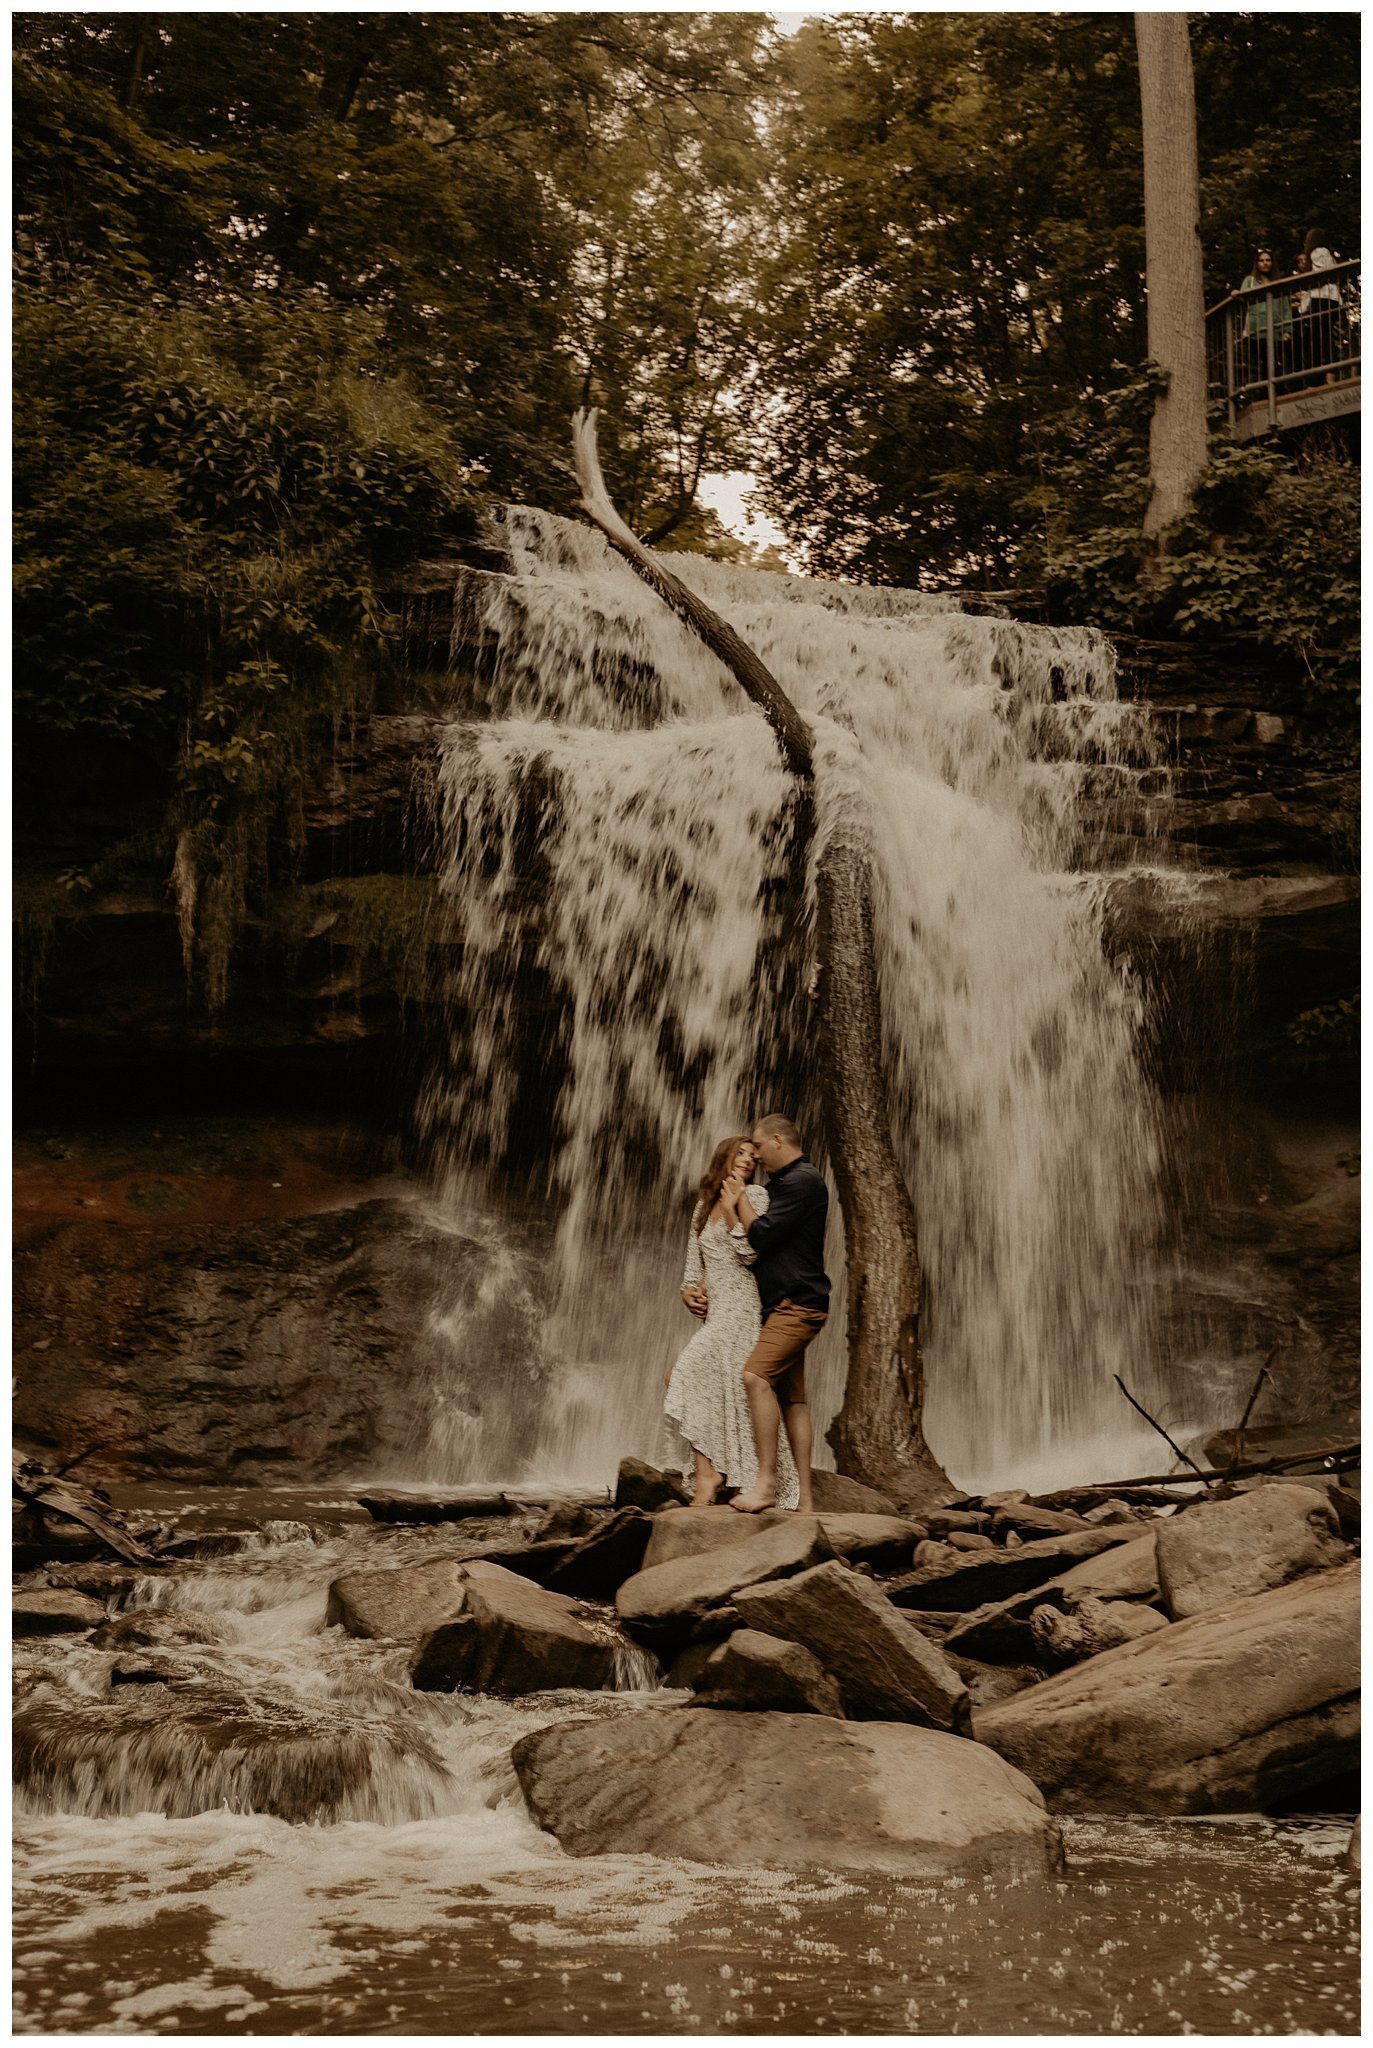 KatieMariePhotography_LaurenBryn_Hamilton Steamy Waterfall Forest Engagement Session_Hamilton Ontario Photographer_0050.jpg